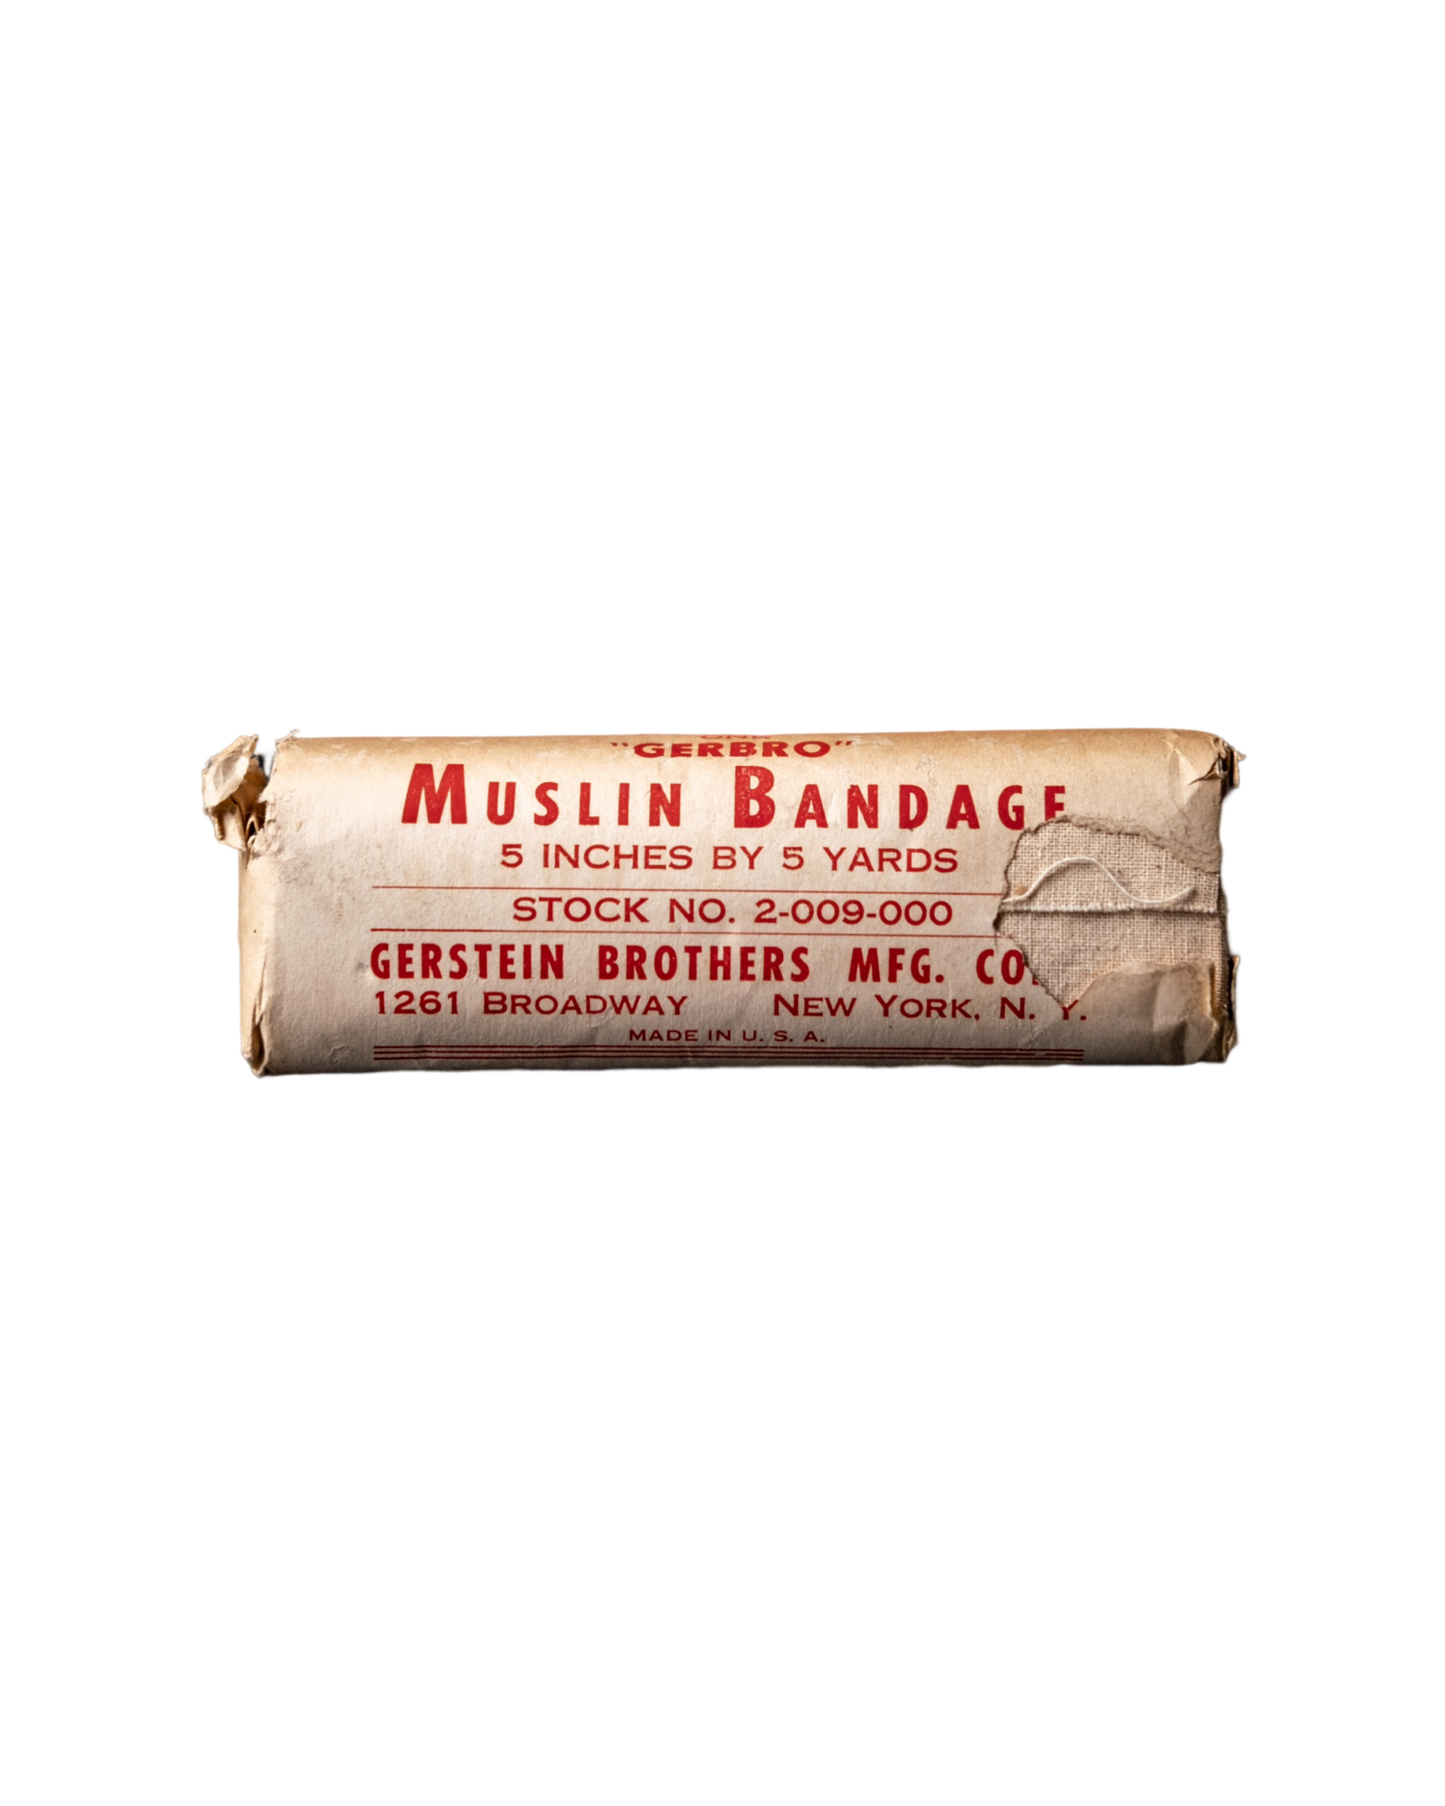 WW2 Muslin Bandage Wrapping